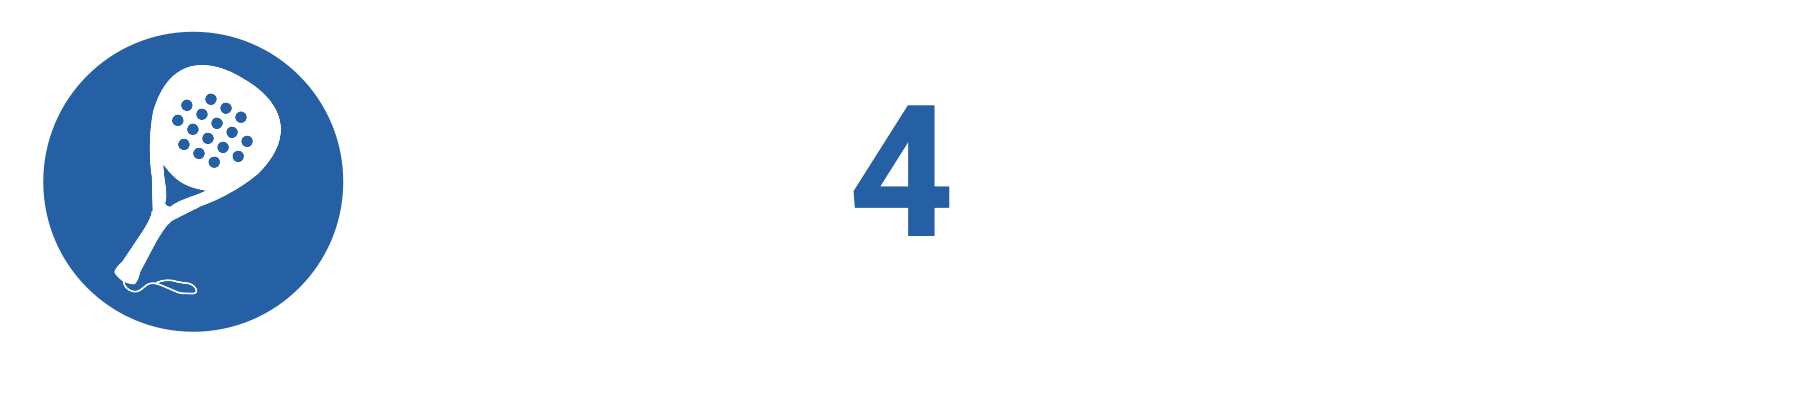 Padel 4 Austria Logo